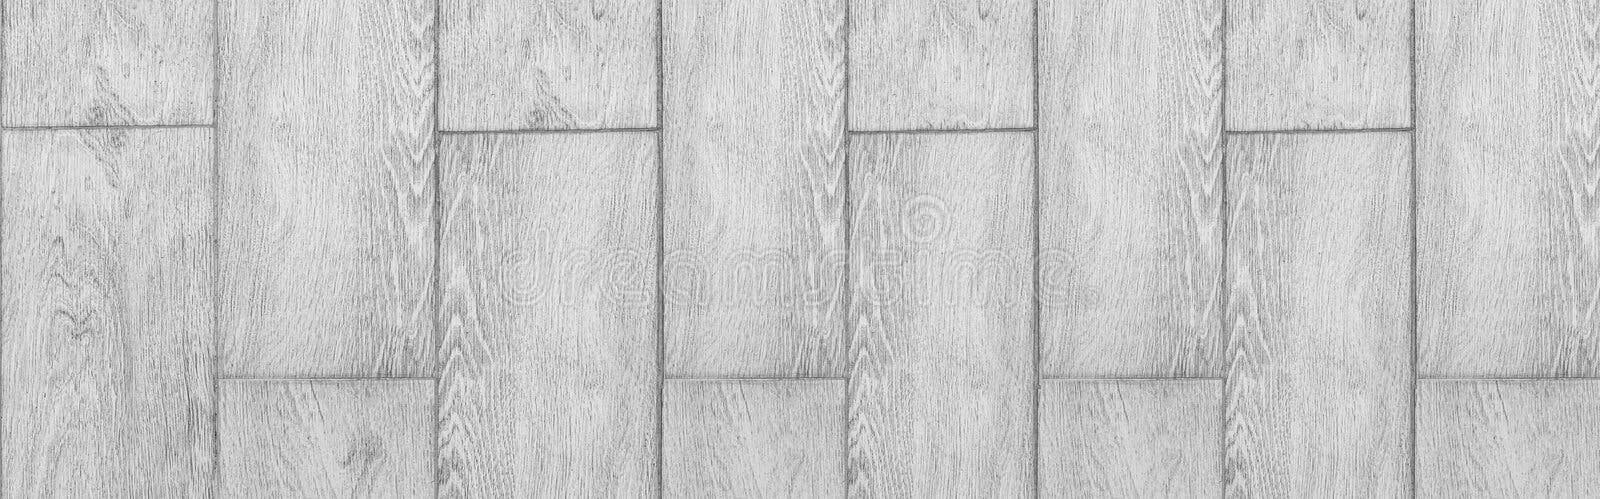 Wood Grain Floor Ceramic Tiles Texture And Background Seamless Stock